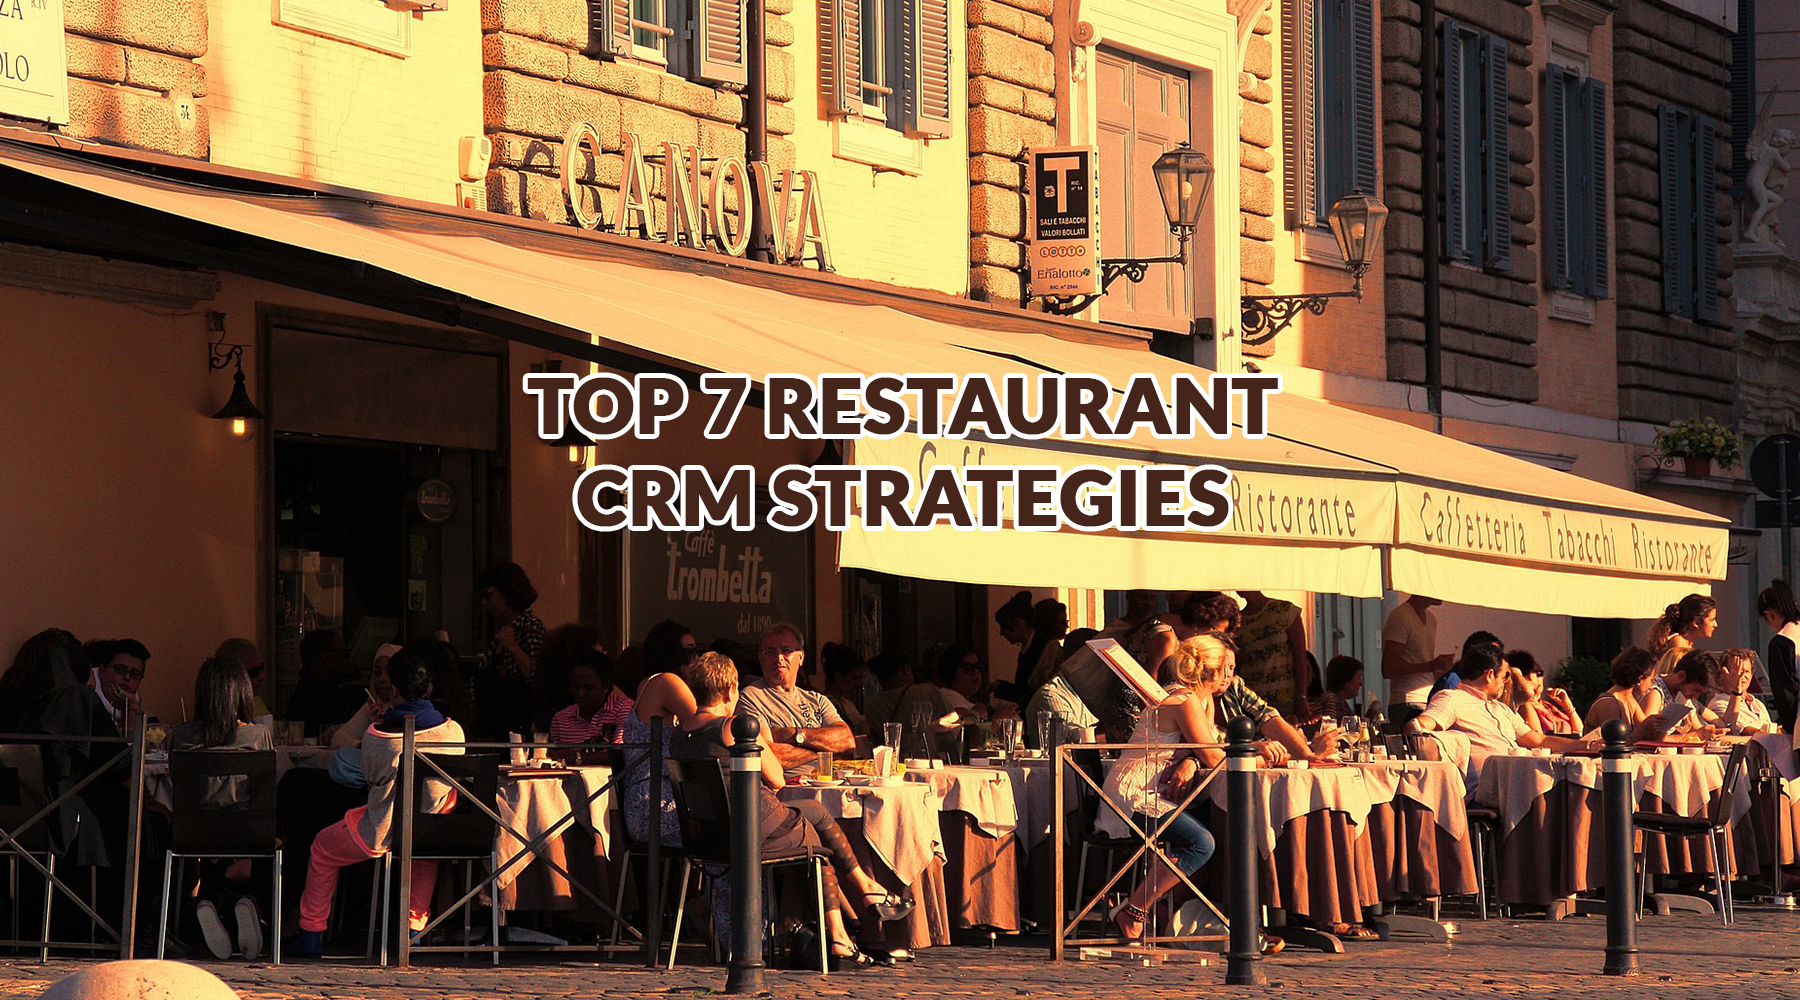 Top 7 Restaurant CRM Strategies